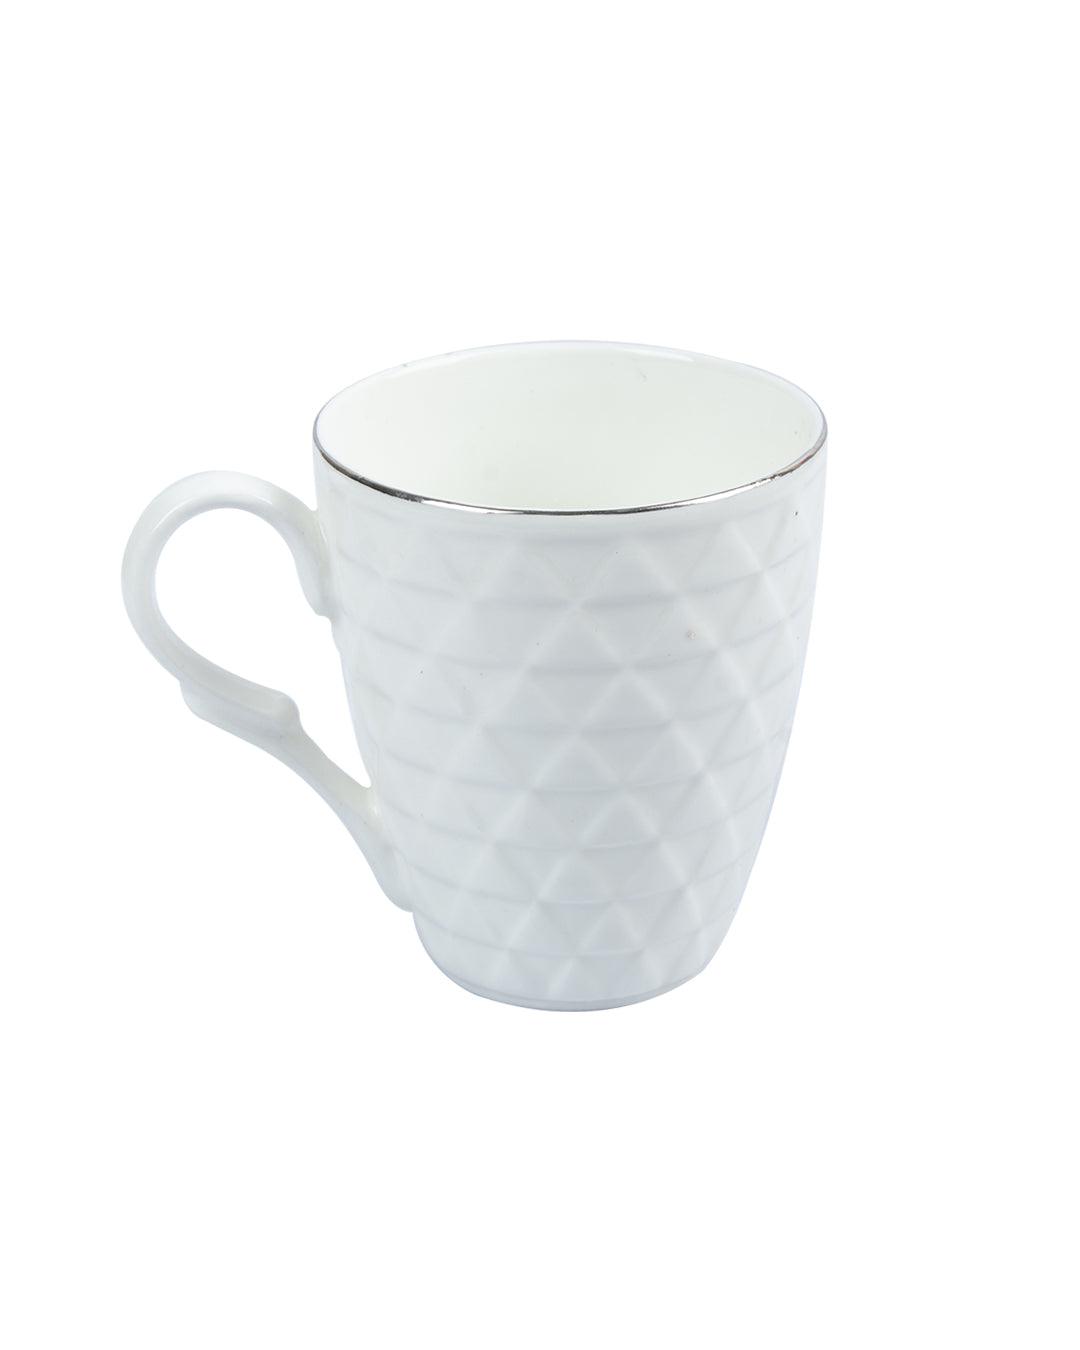 Diamond Textured Ceramic Coffee Mug With Golden Ring Corner (Cream White, 330 mL) - MARKET 99